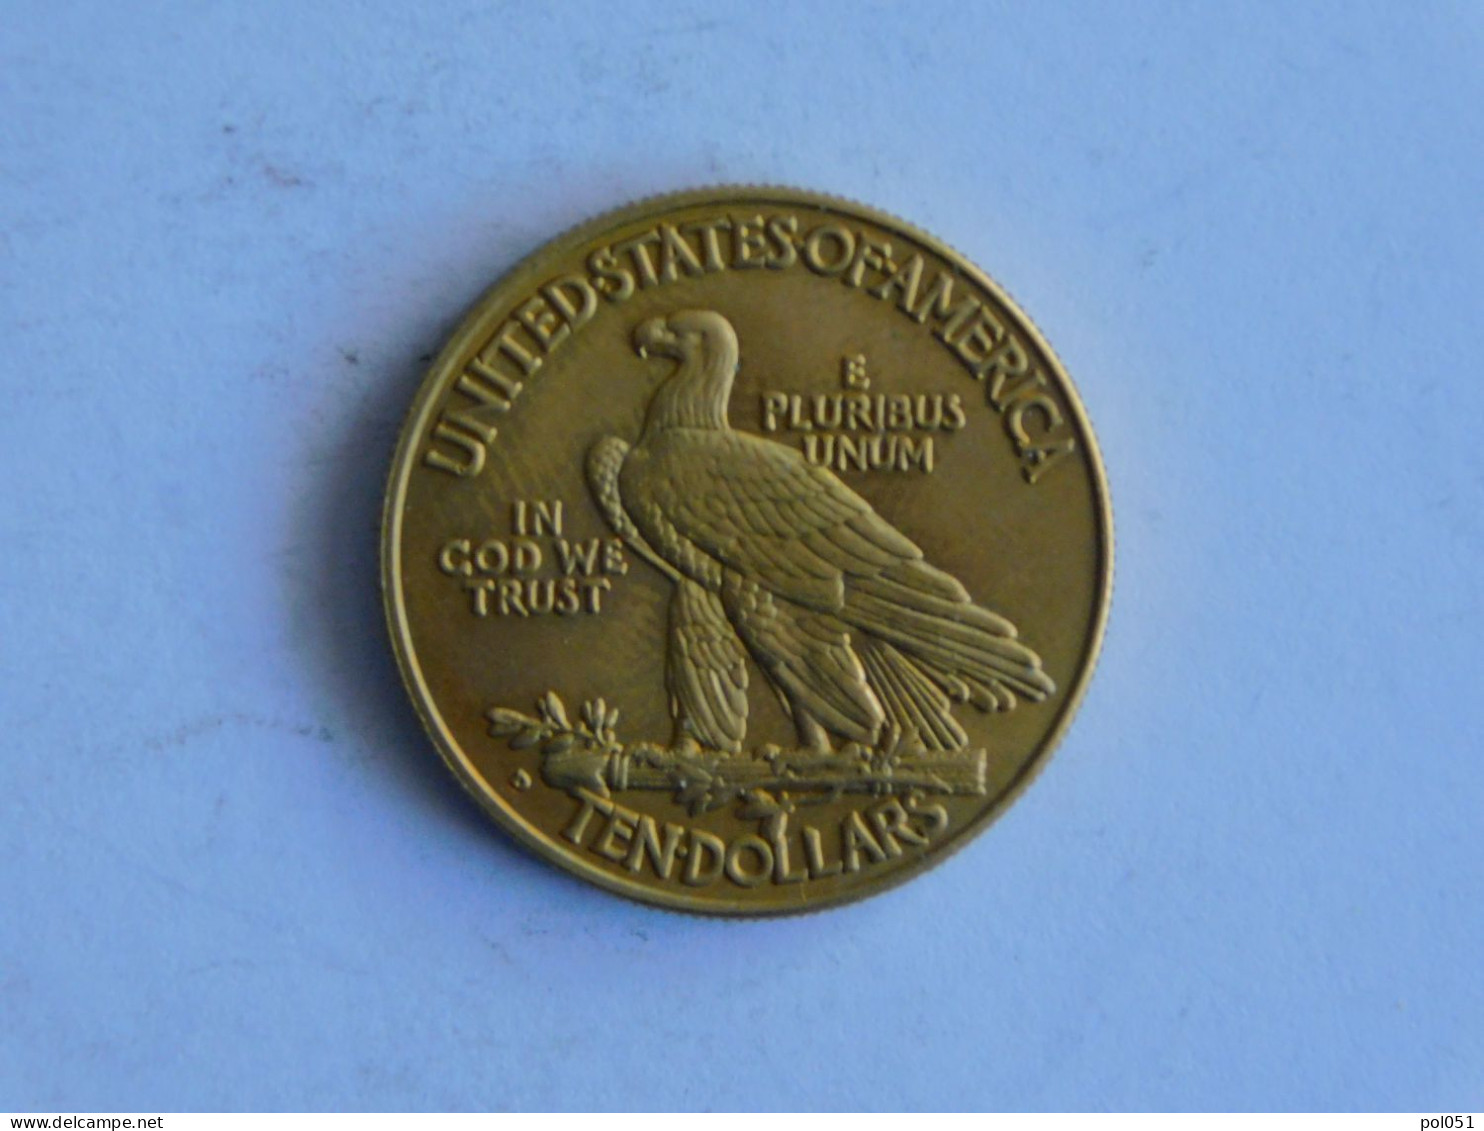 USA 10 TEN DOLLAR 1911 D OR GOLD Dollars Copie Copy - 10$ - Eagles - 1907-1933: Indian Head (Testa  Di Indiano)